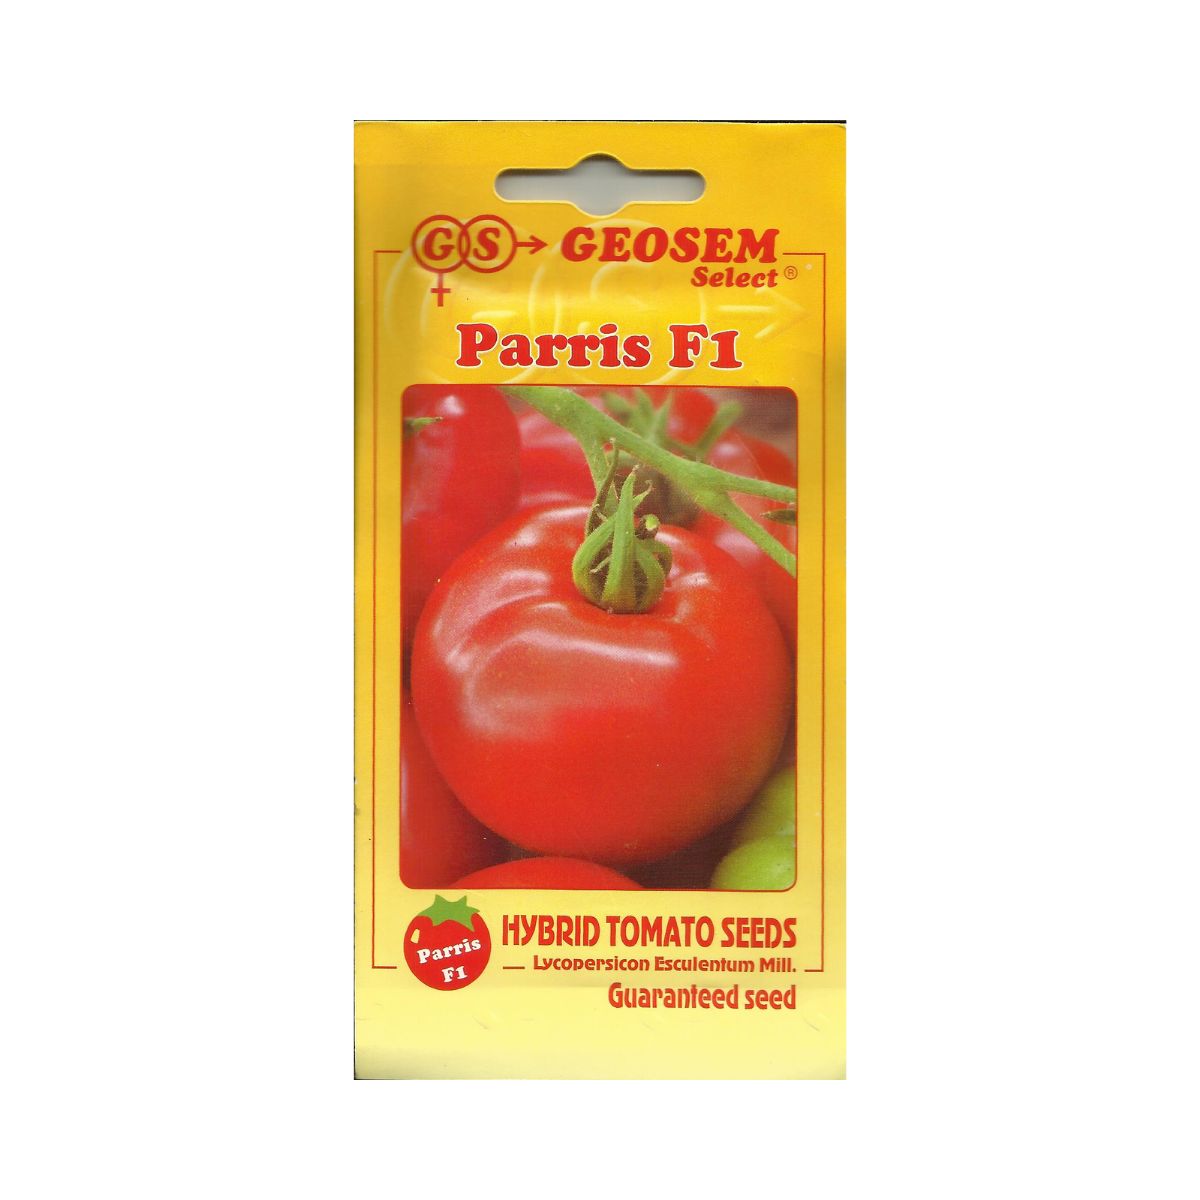 Tomate - Seminte Tomate extra-timpurii PARRIS F1 GeosemSelect 1000 sem, hectarul.ro